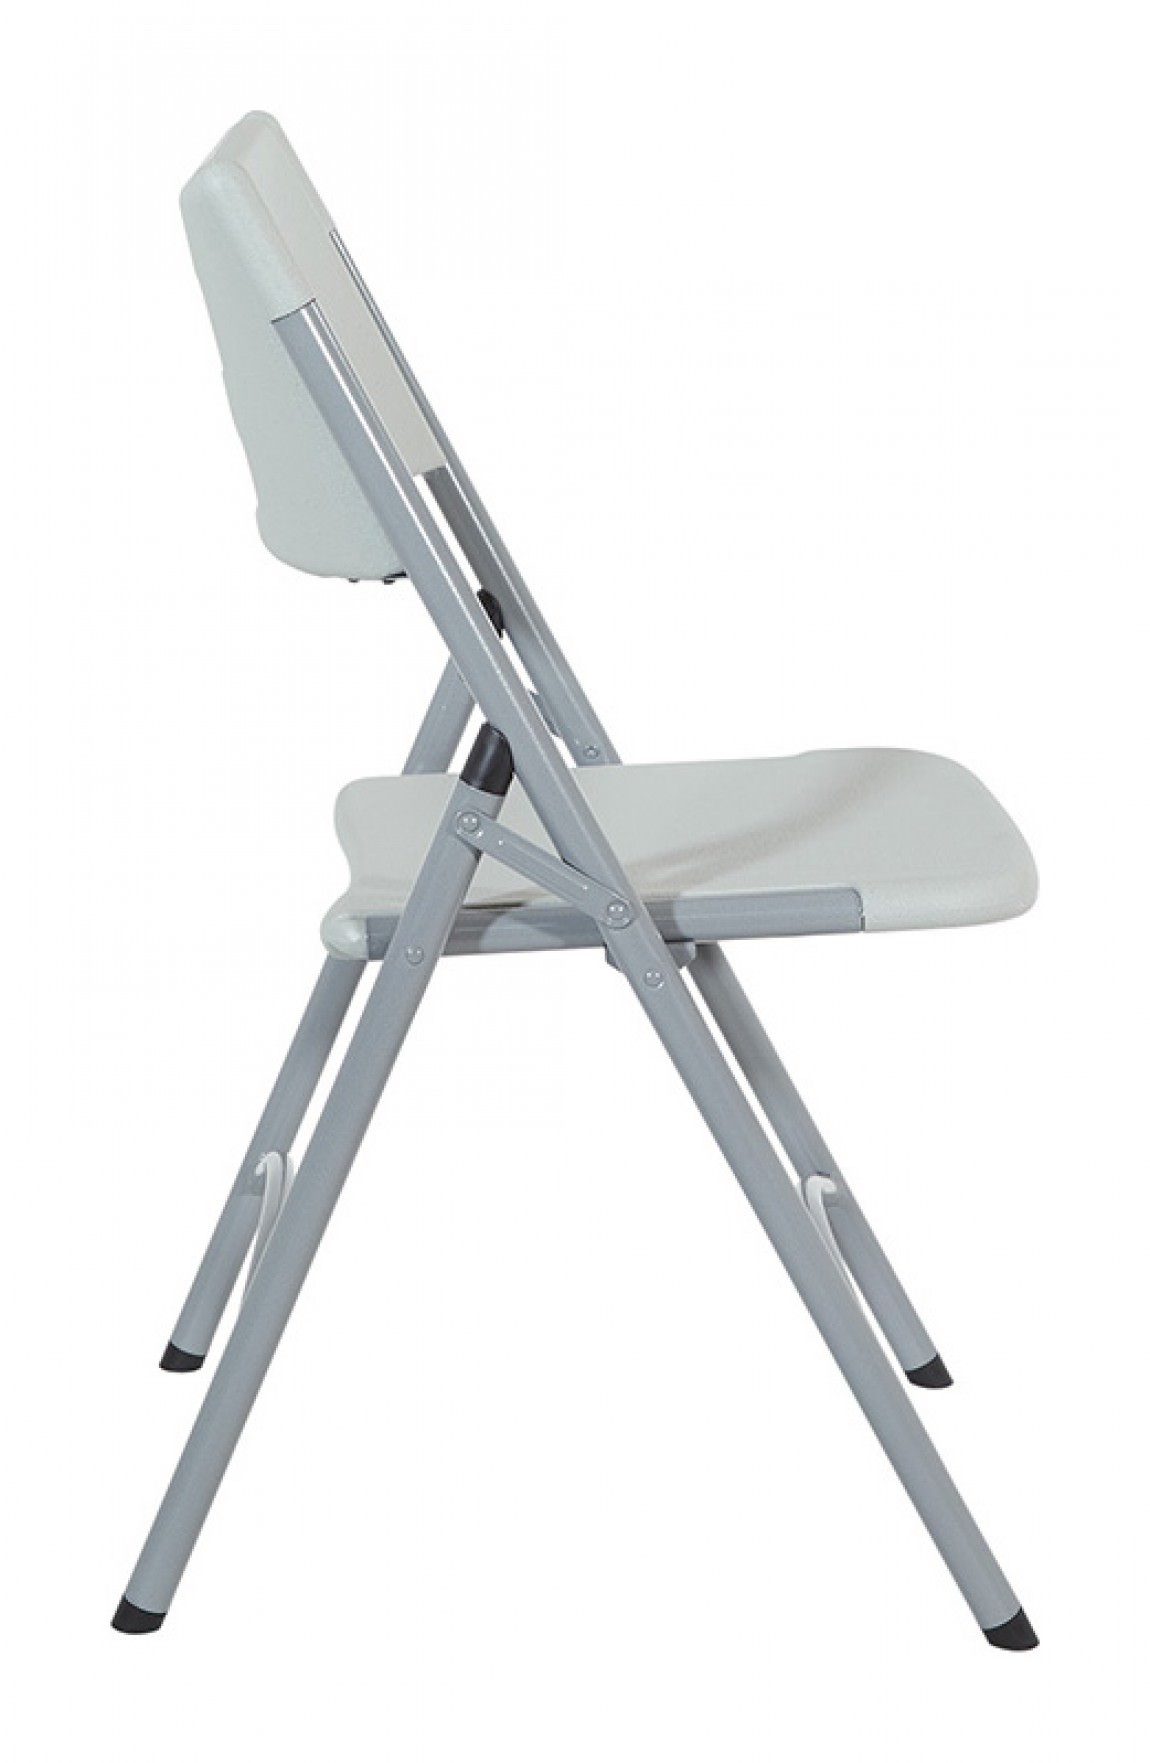 Resin Folding Chair - 4 Pack